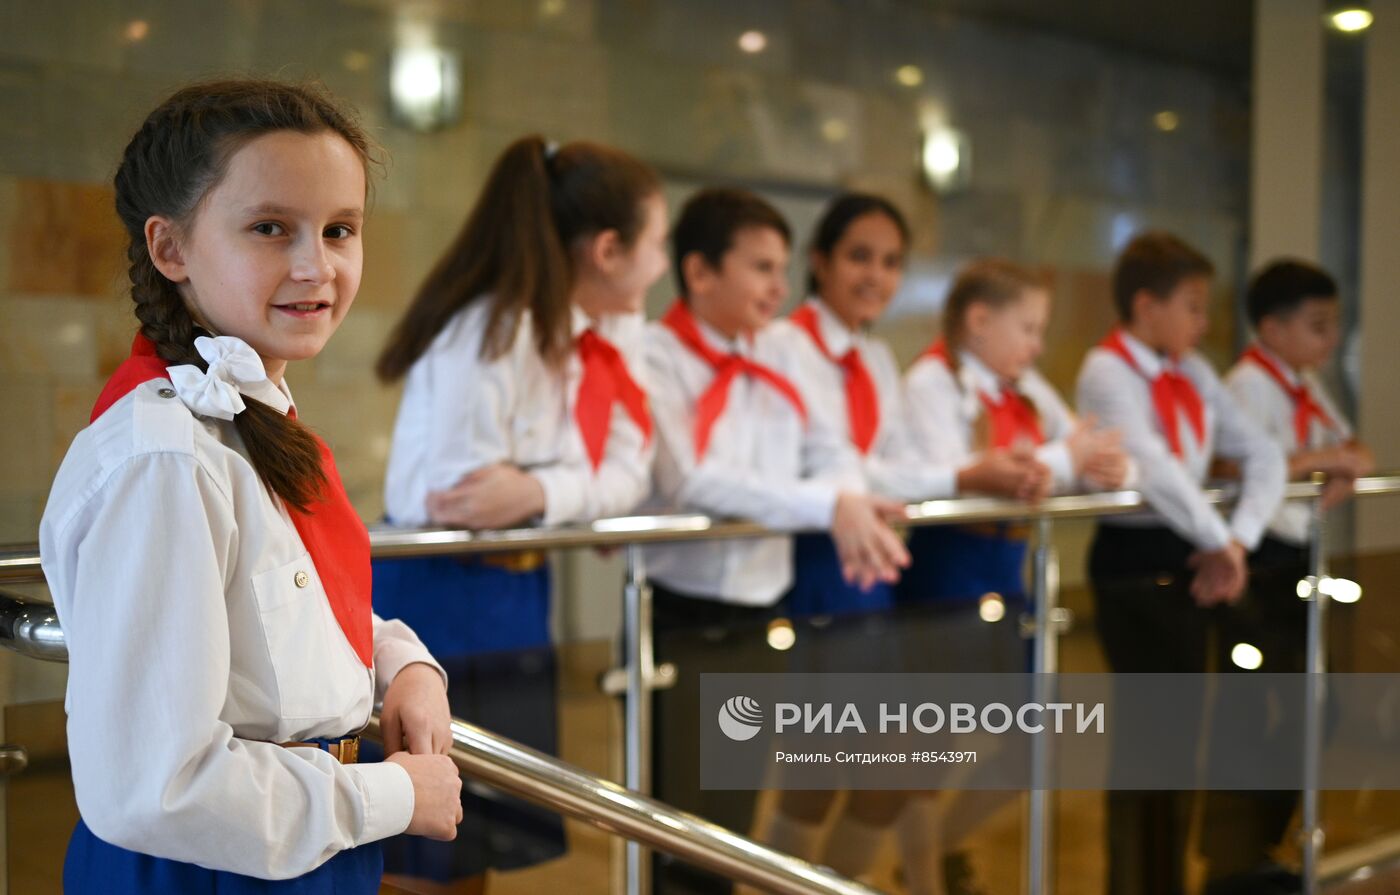 Съезд Ленинского Коммунистического Союза Молодежи РФ